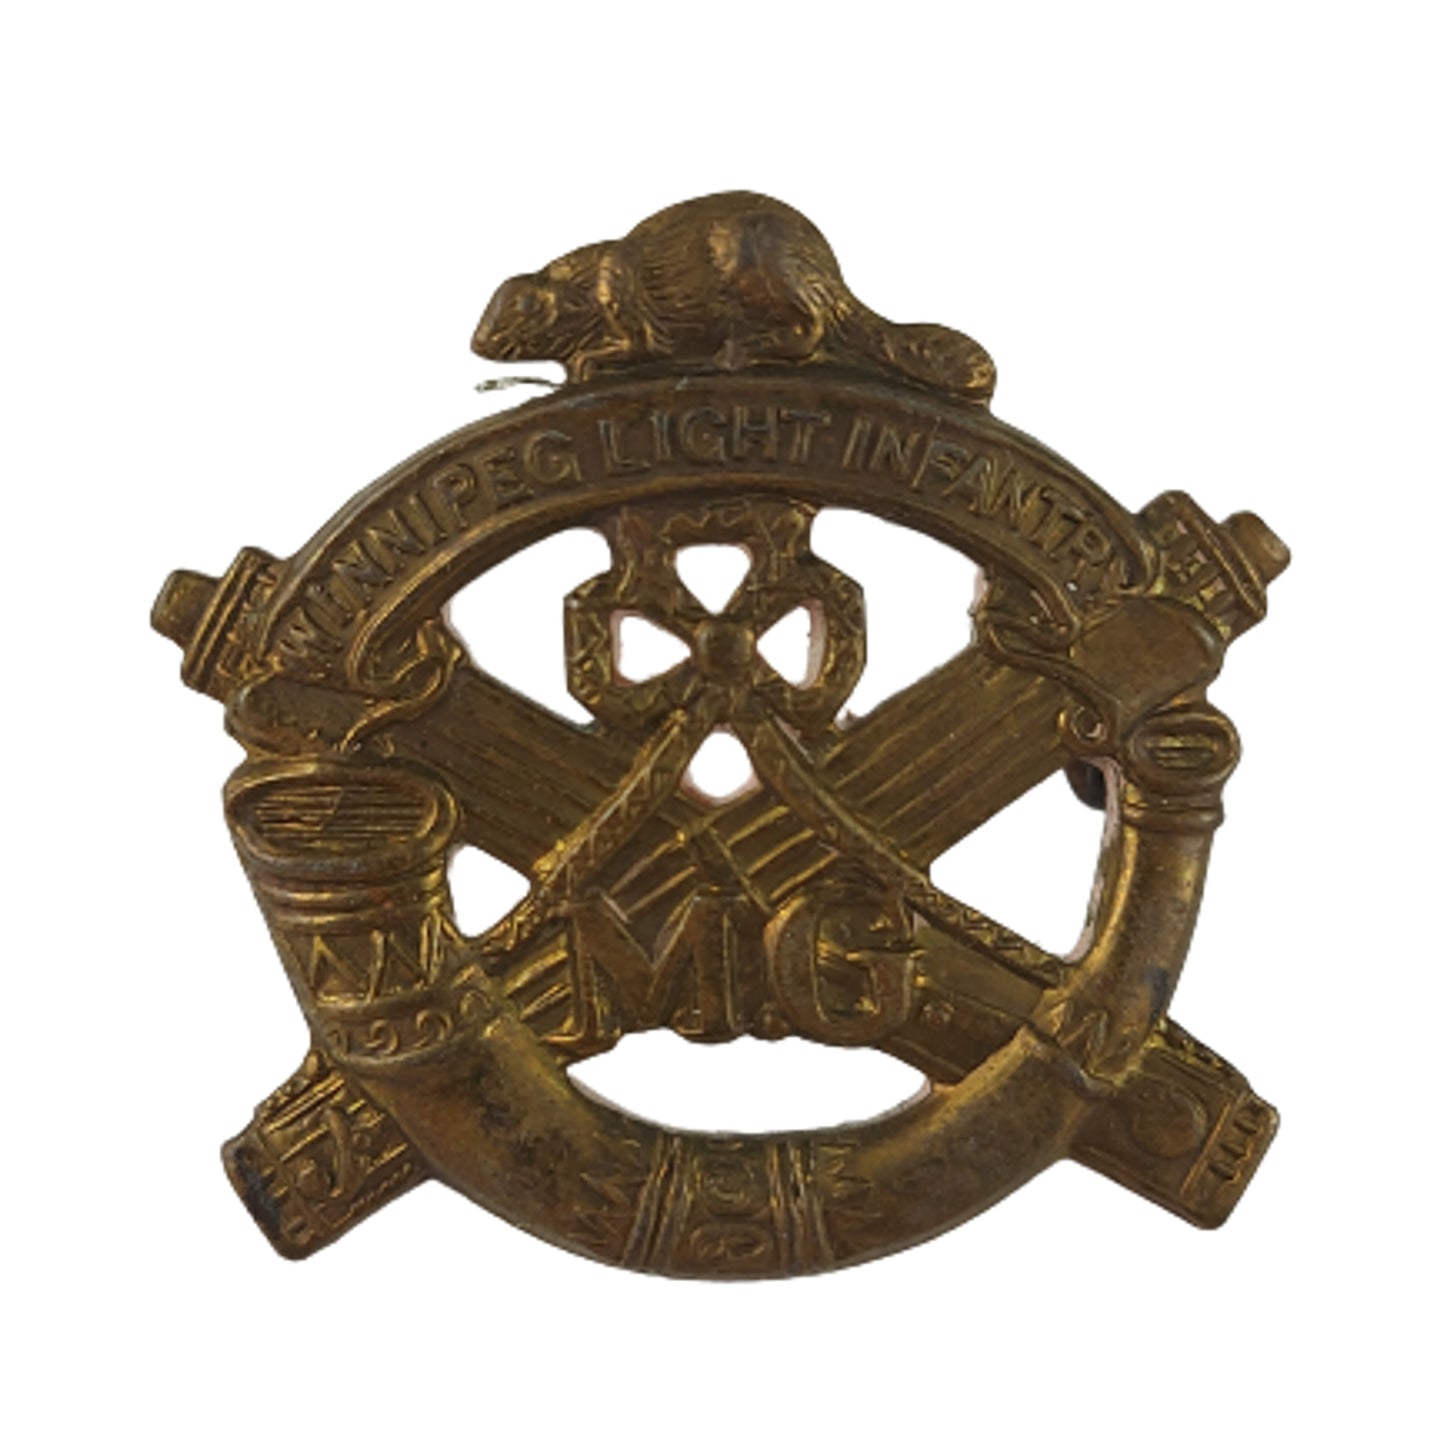 1922 WLI Winnipeg Light Infantry MG Collar Badge